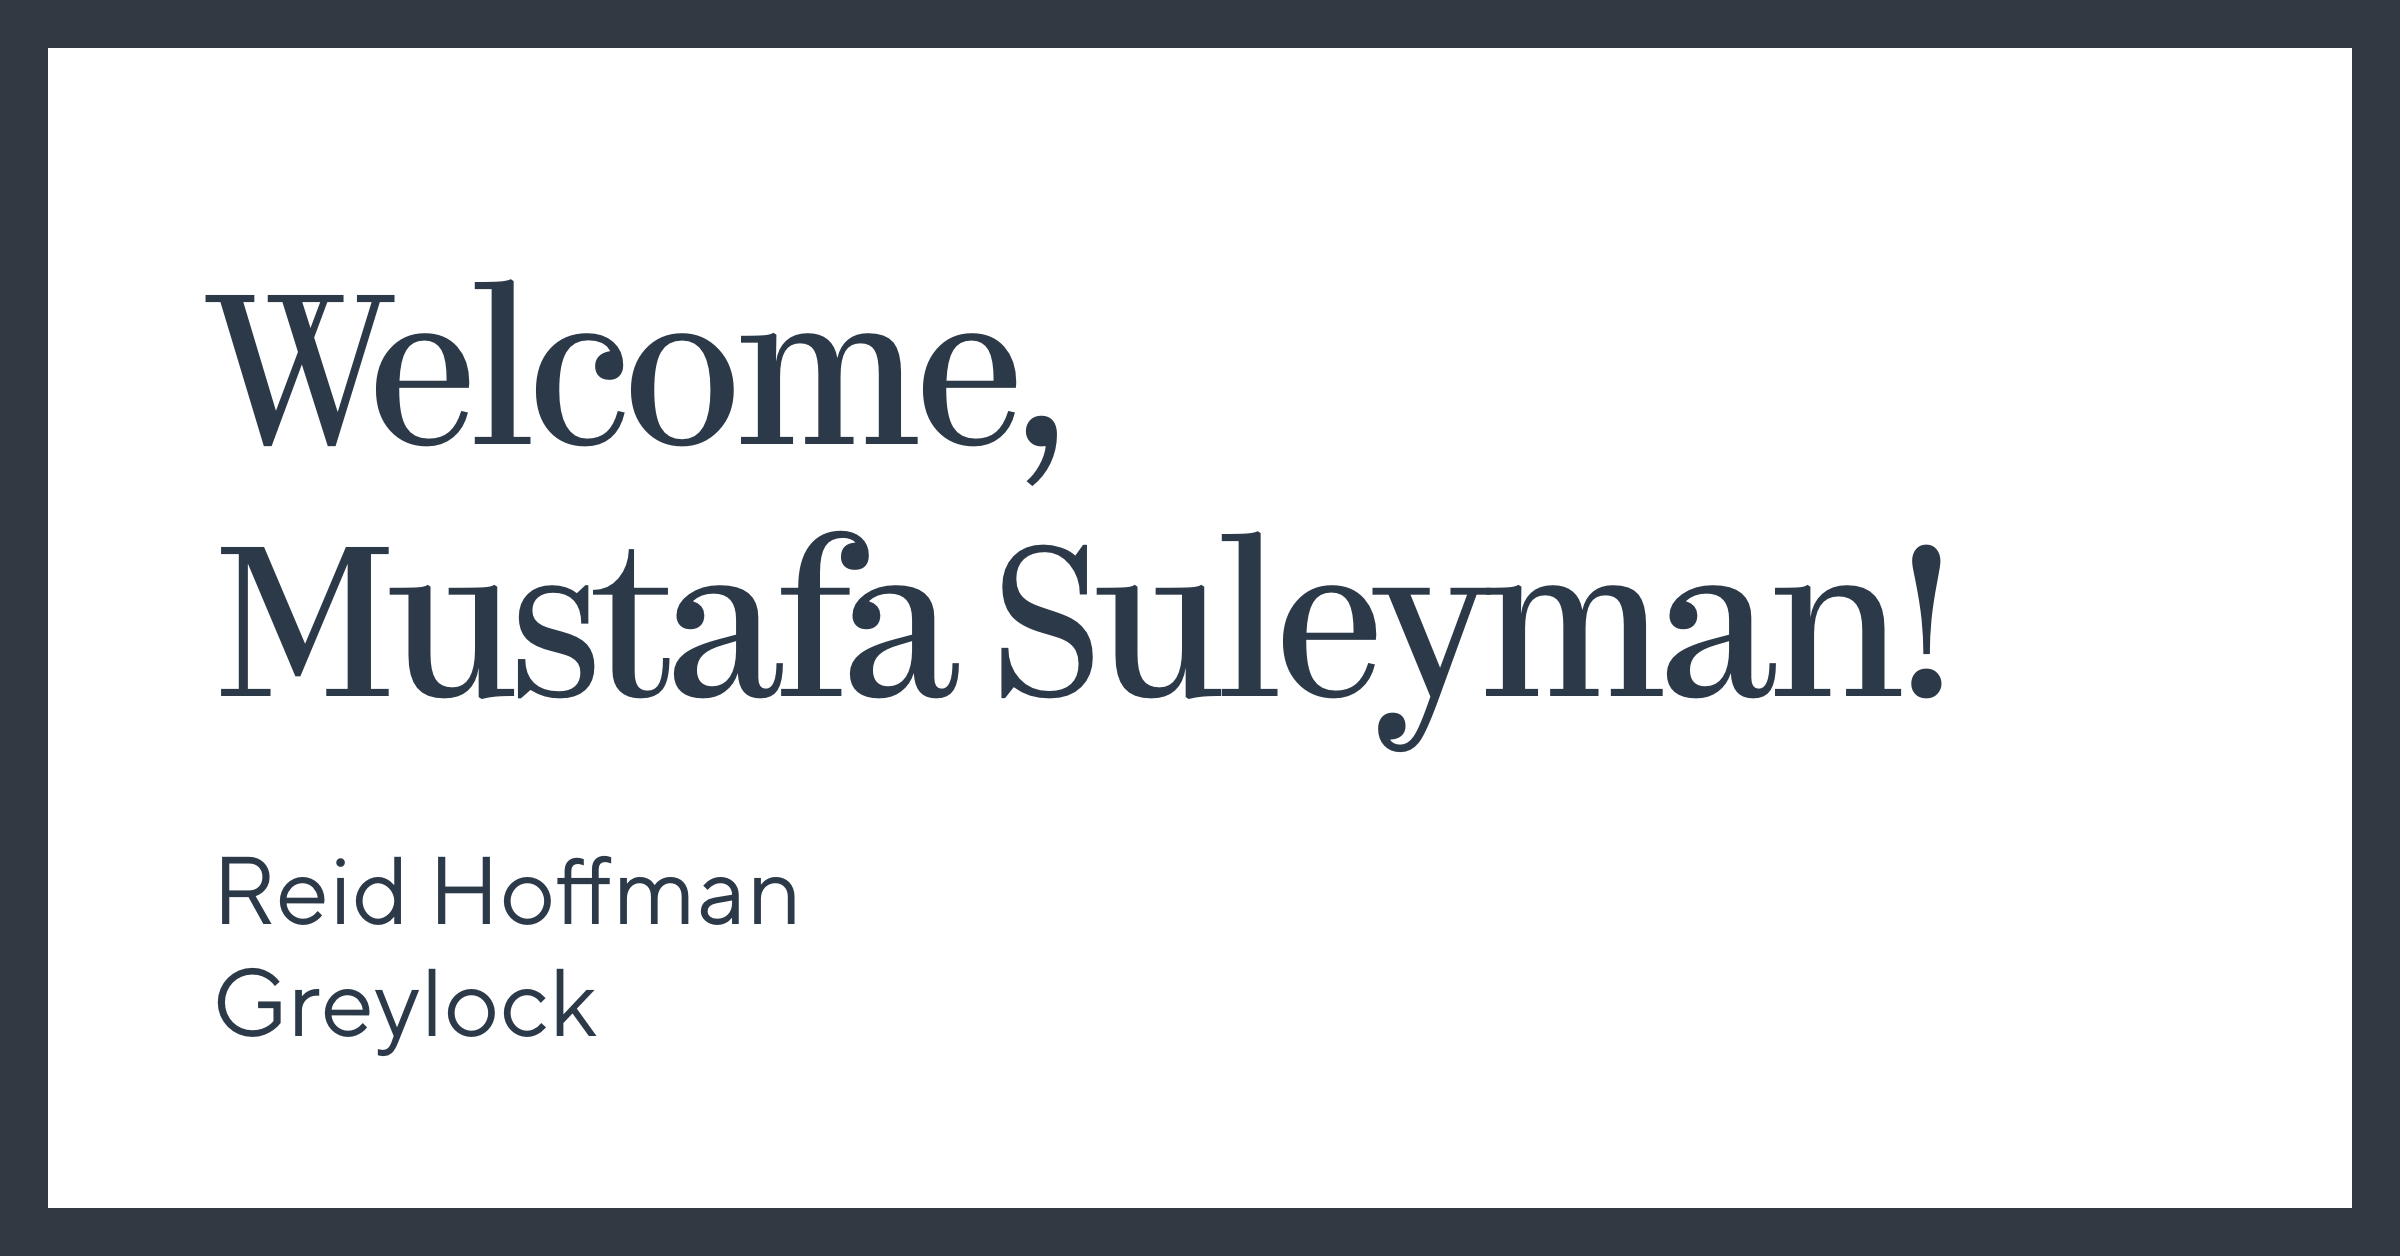 Welcome, Mustafa Suleyman